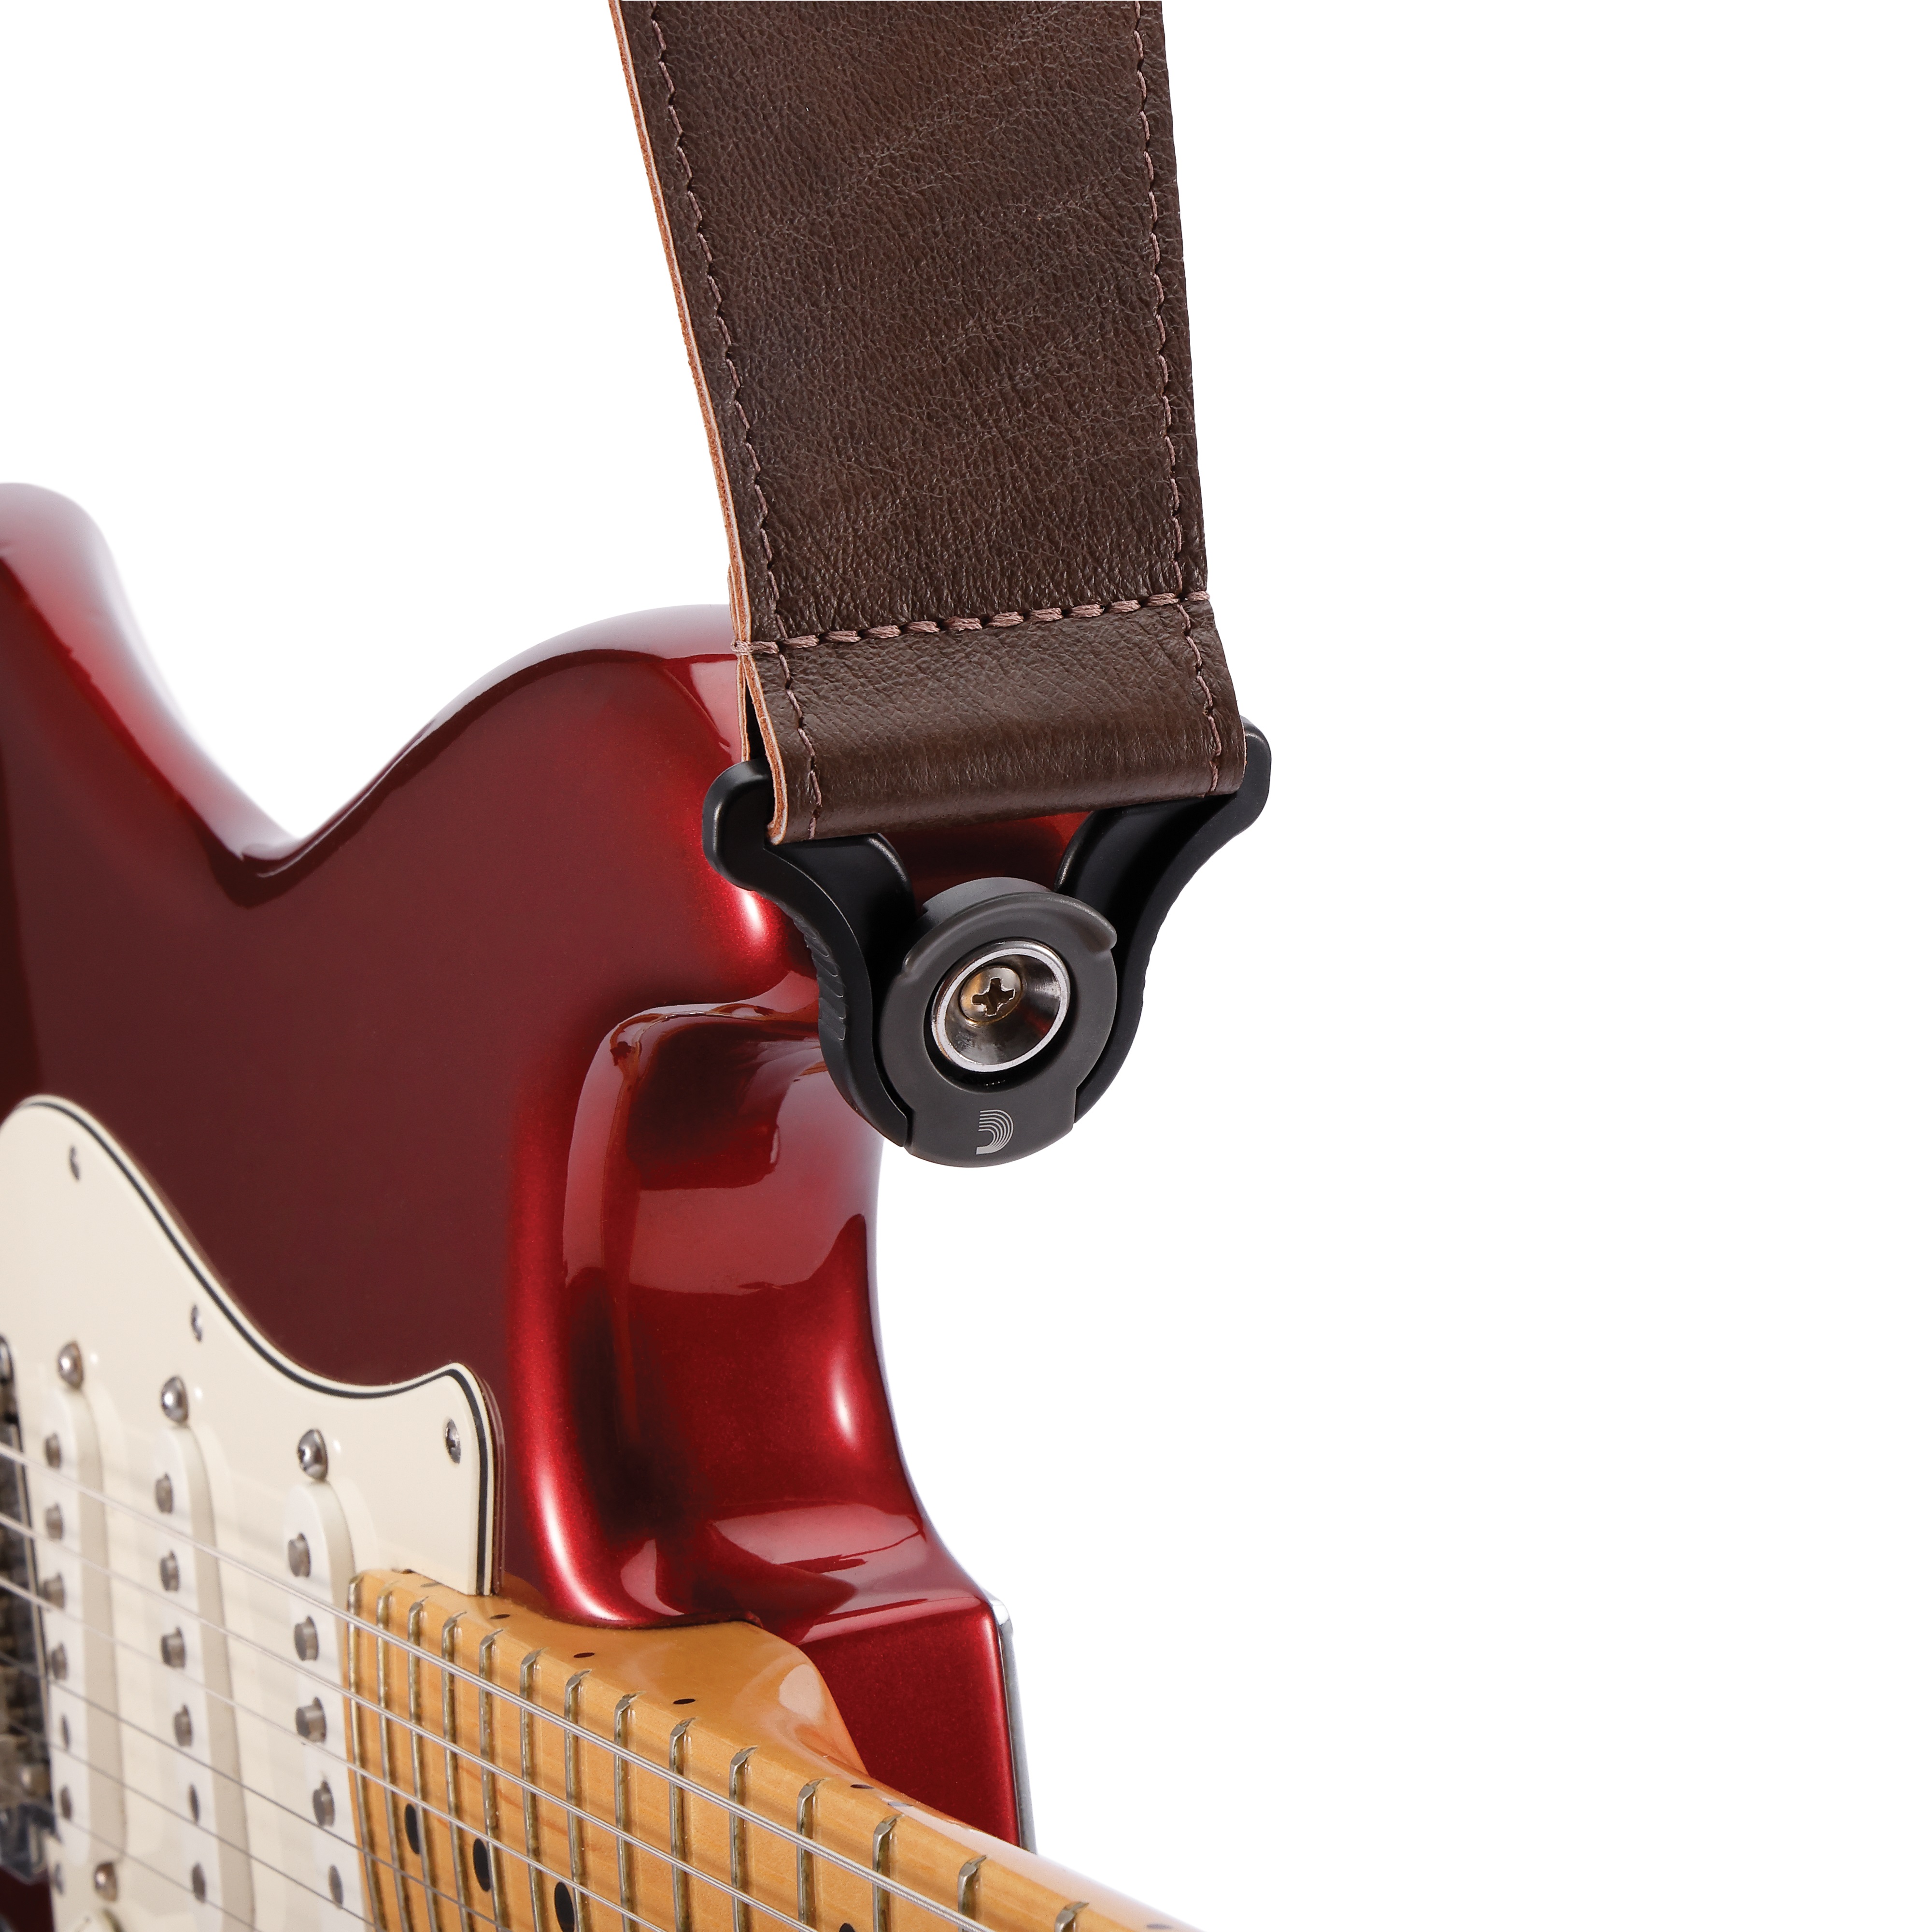 D'addario Auto Lock Cuir Guitar Strap Brown 6,3 Cm - Gitarrengurt - Variation 3